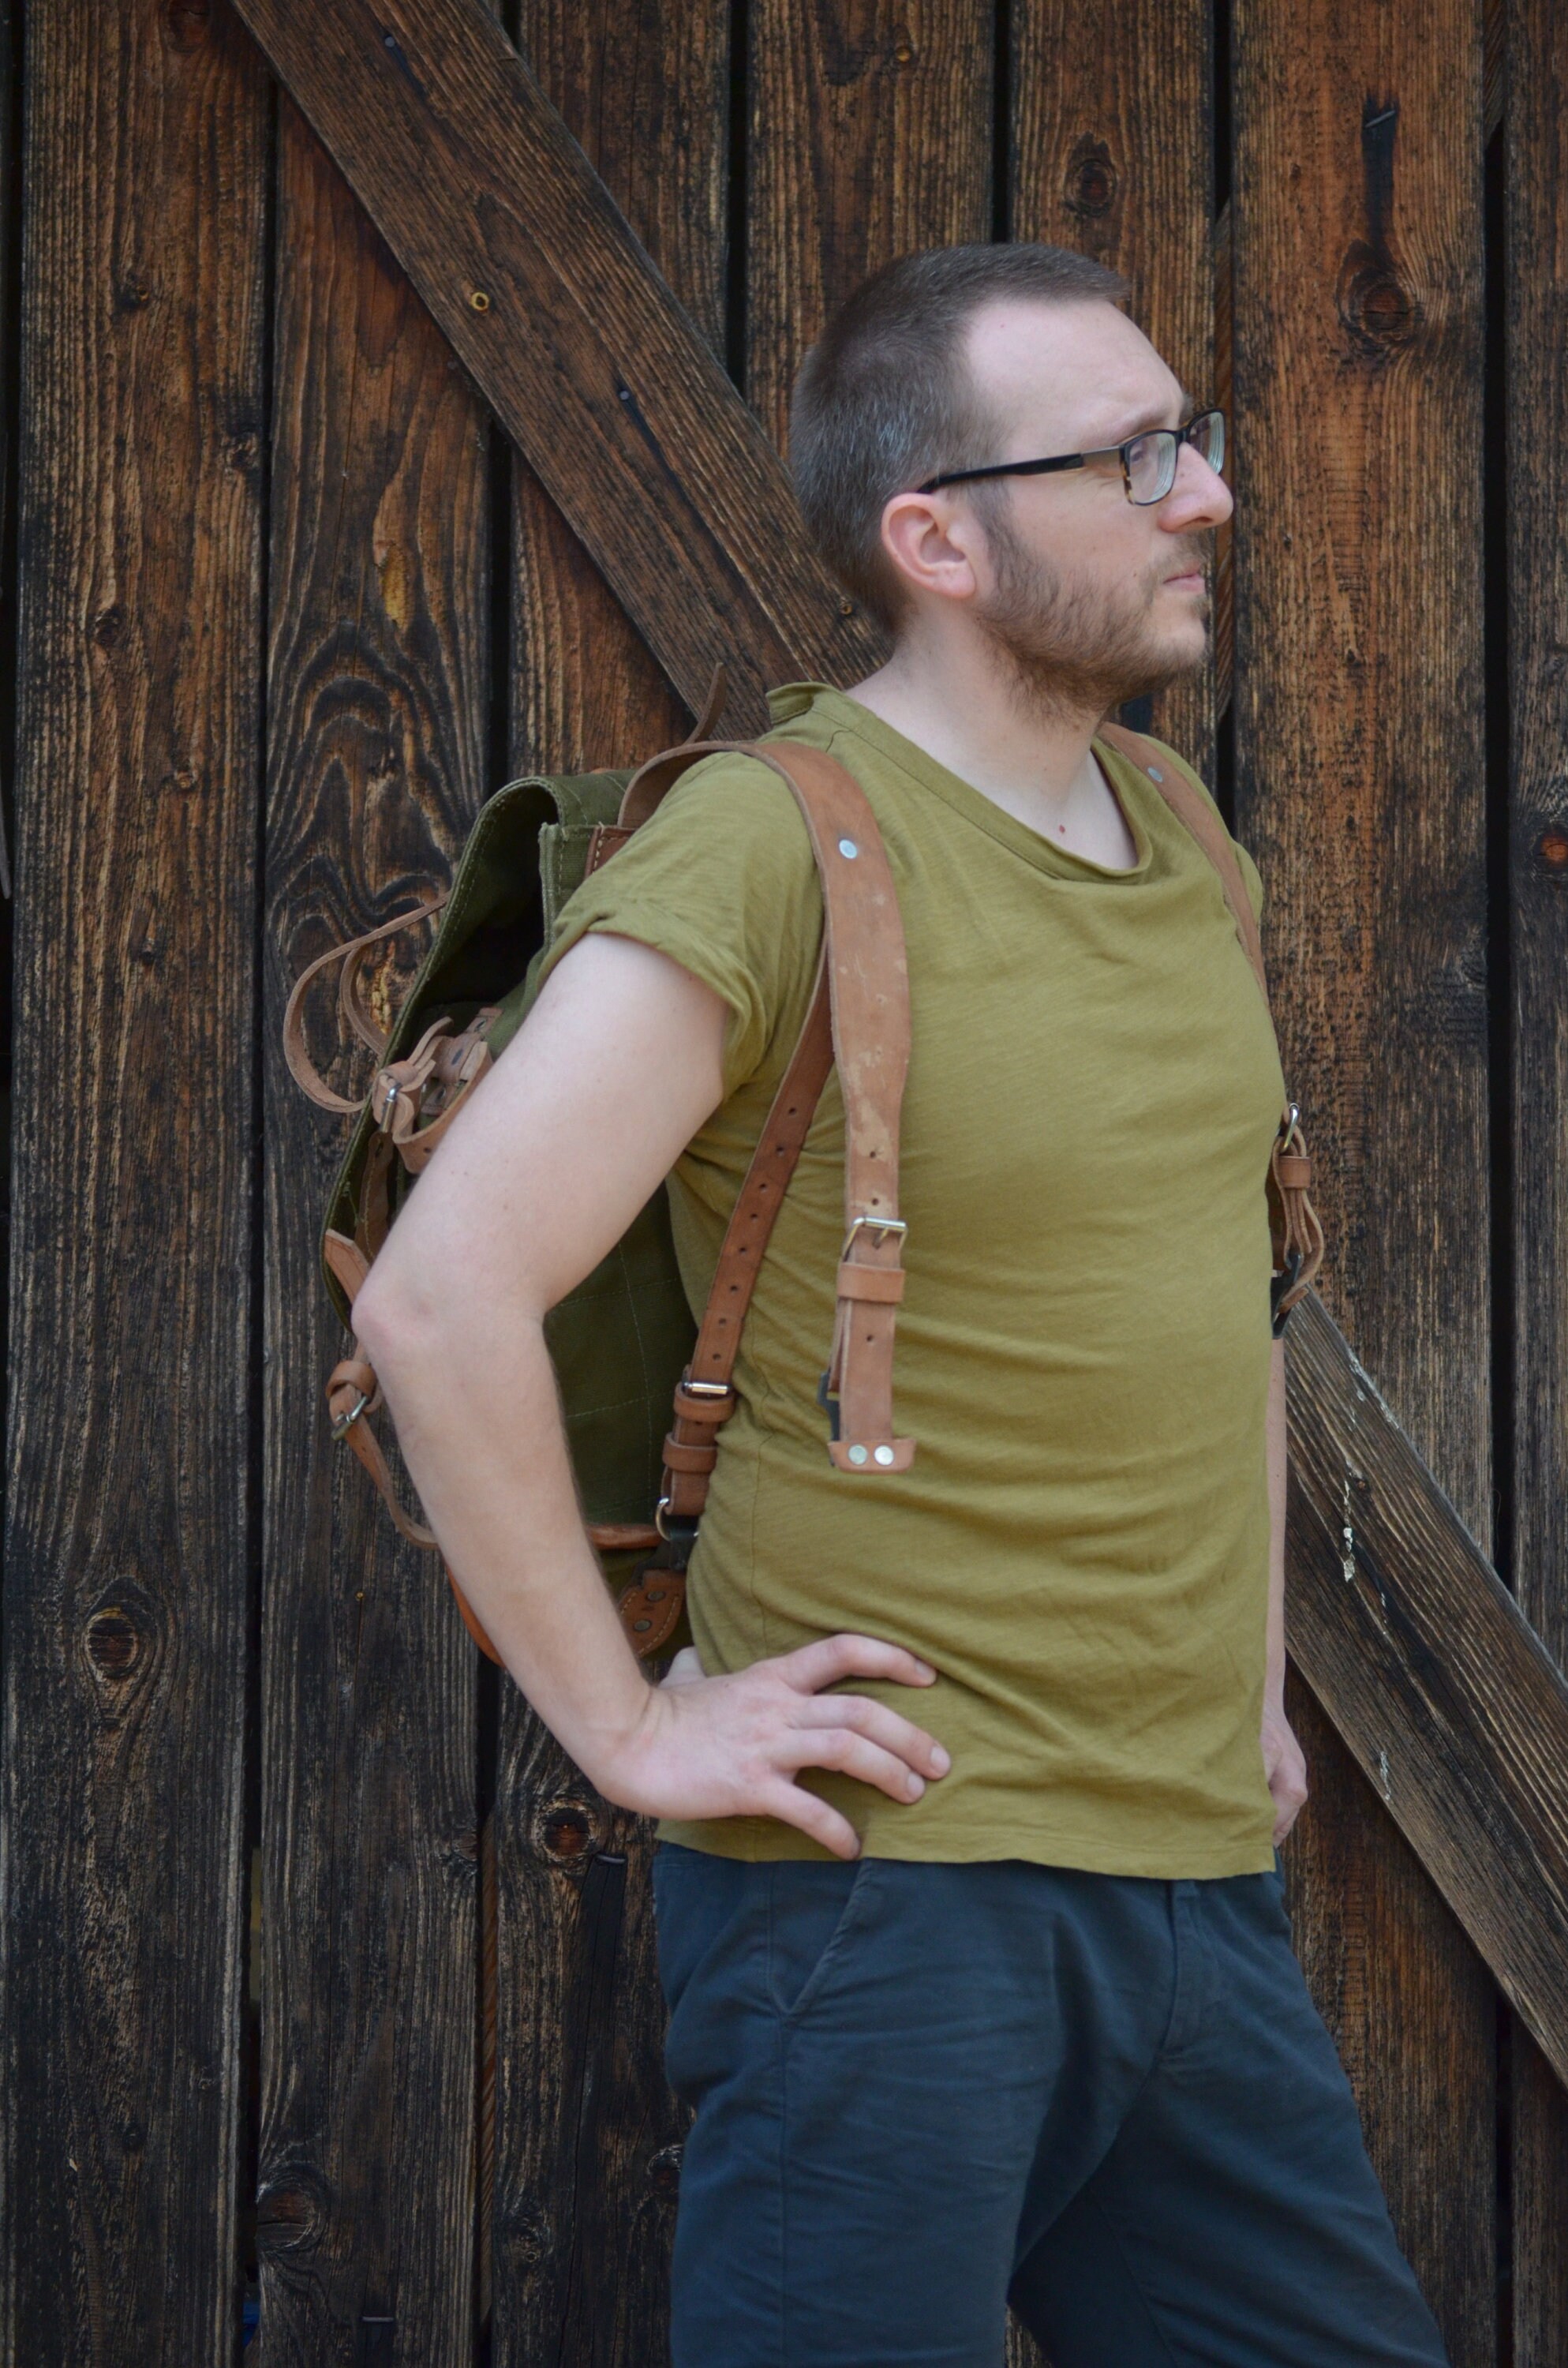 vintage army backpack - Antares Furnishings